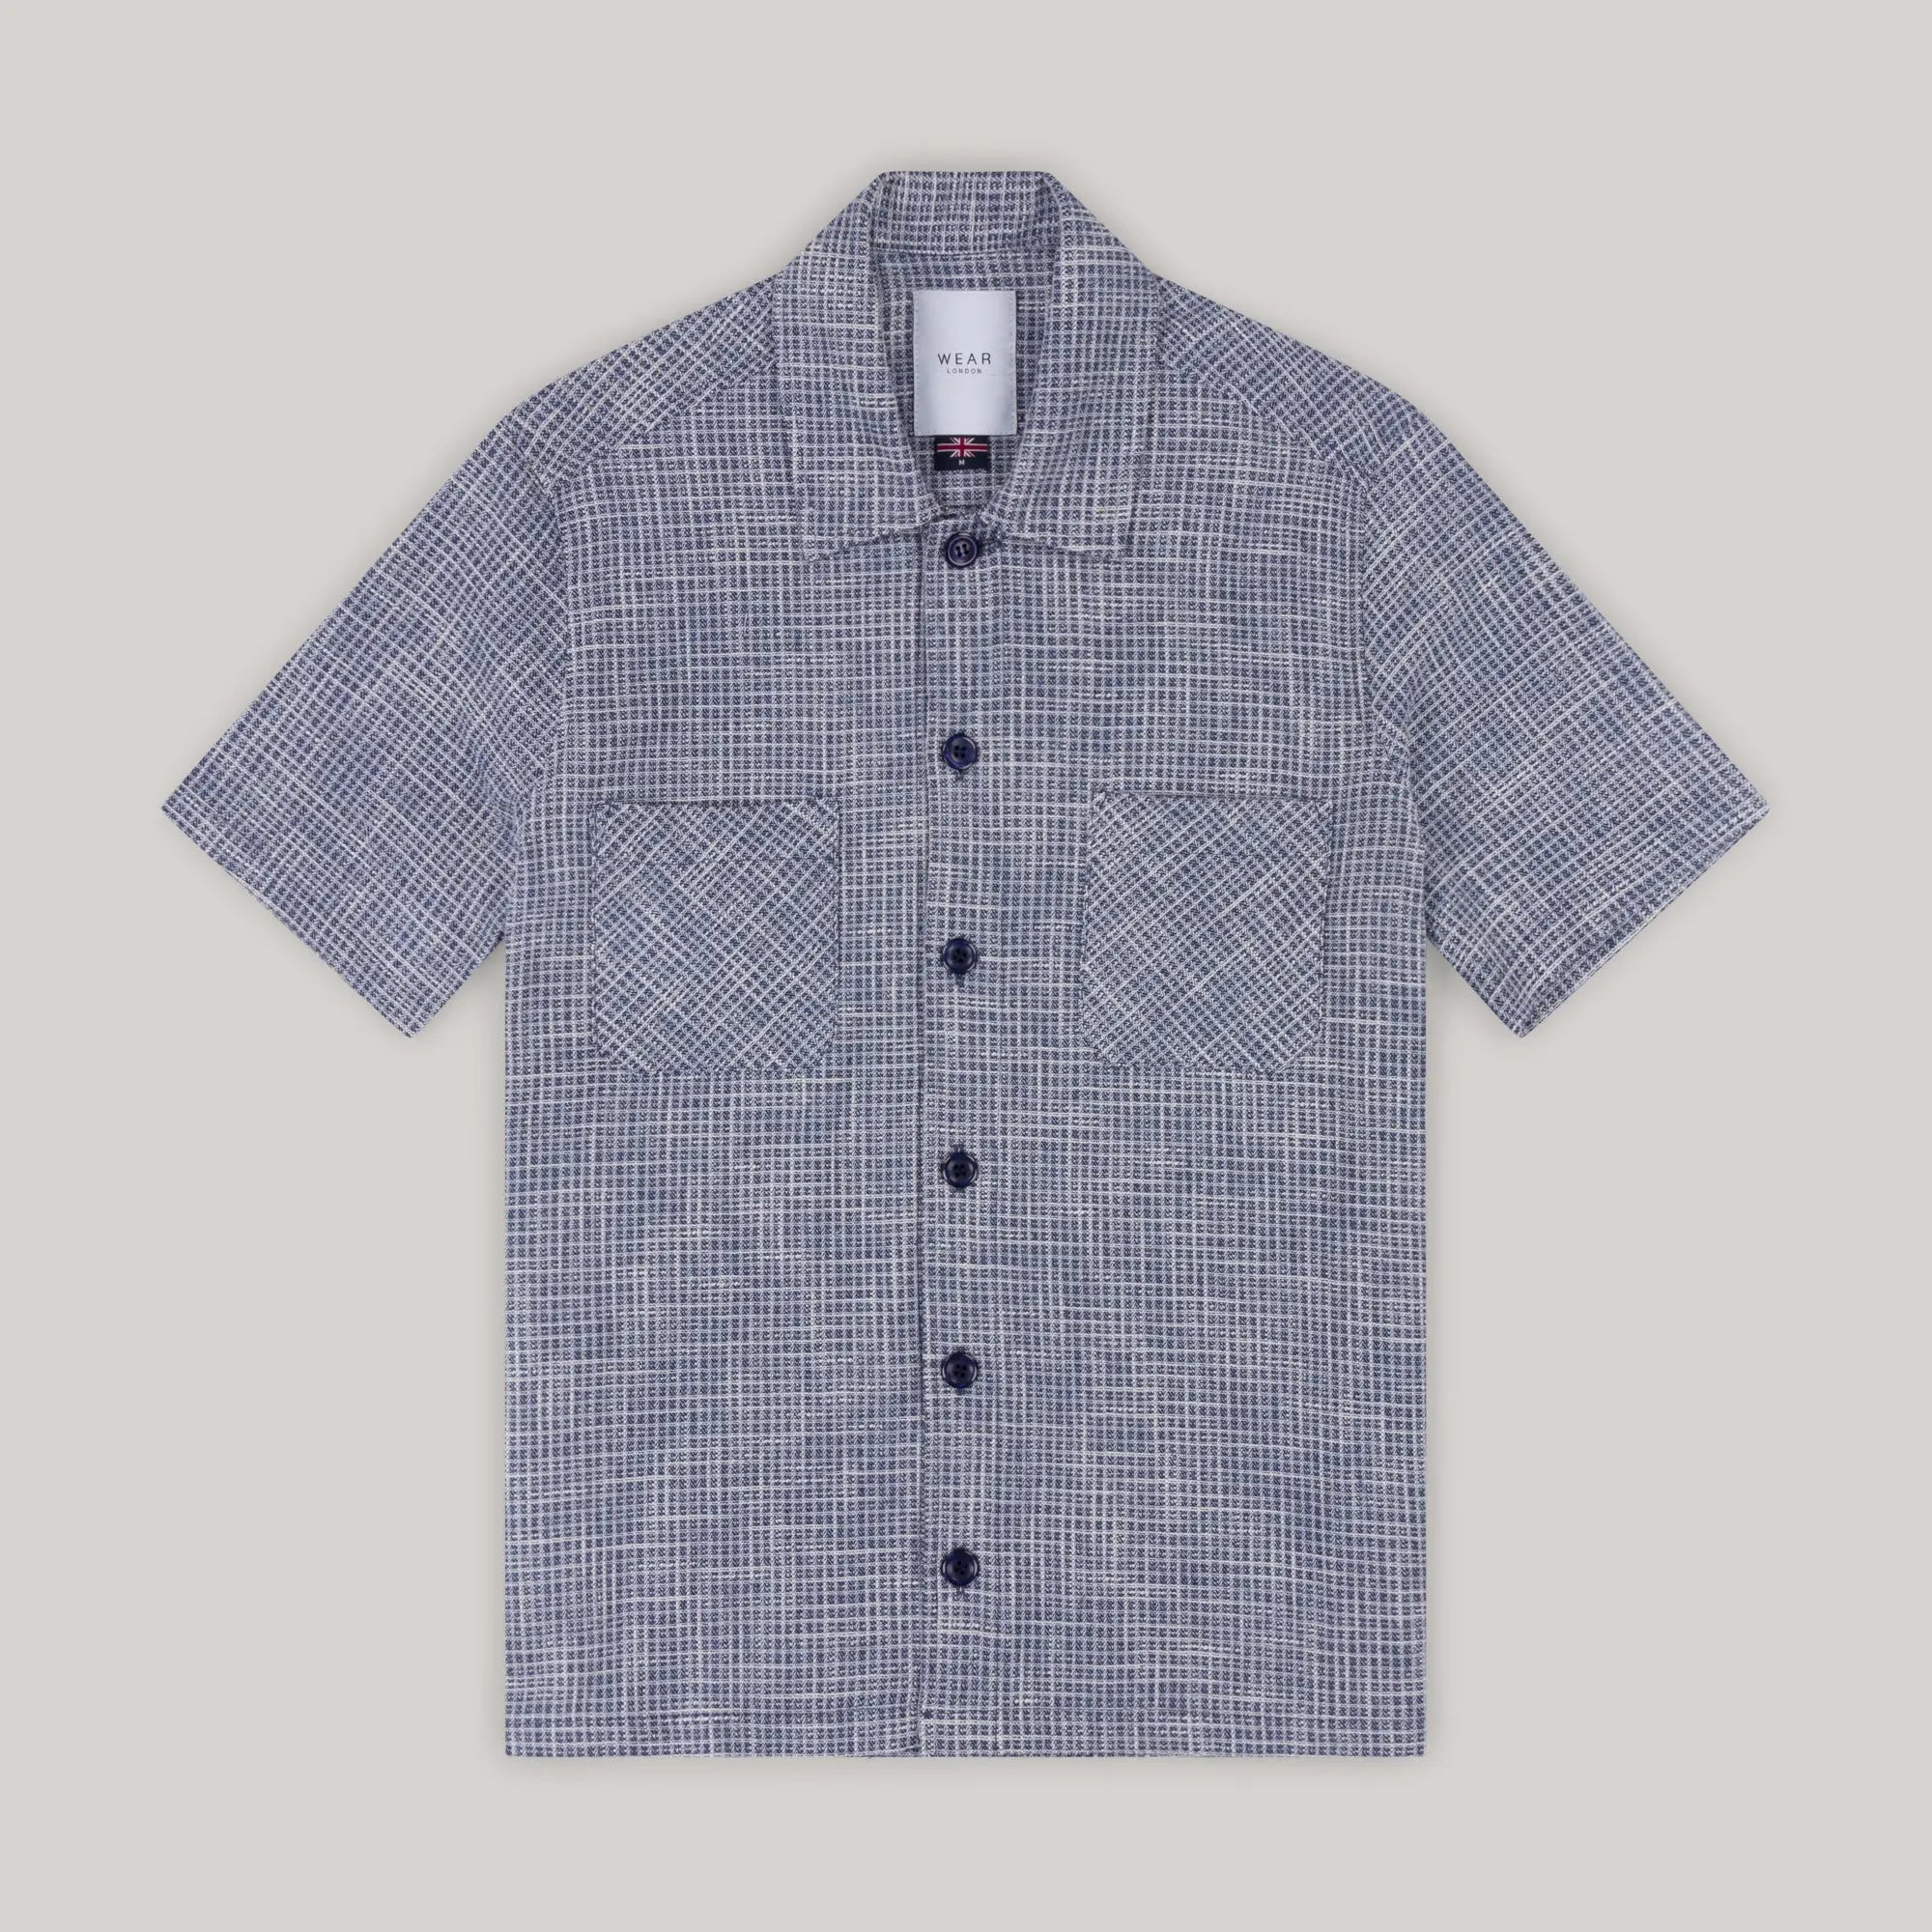 Bethnal Shirt - Pisa - Navy - Wear London